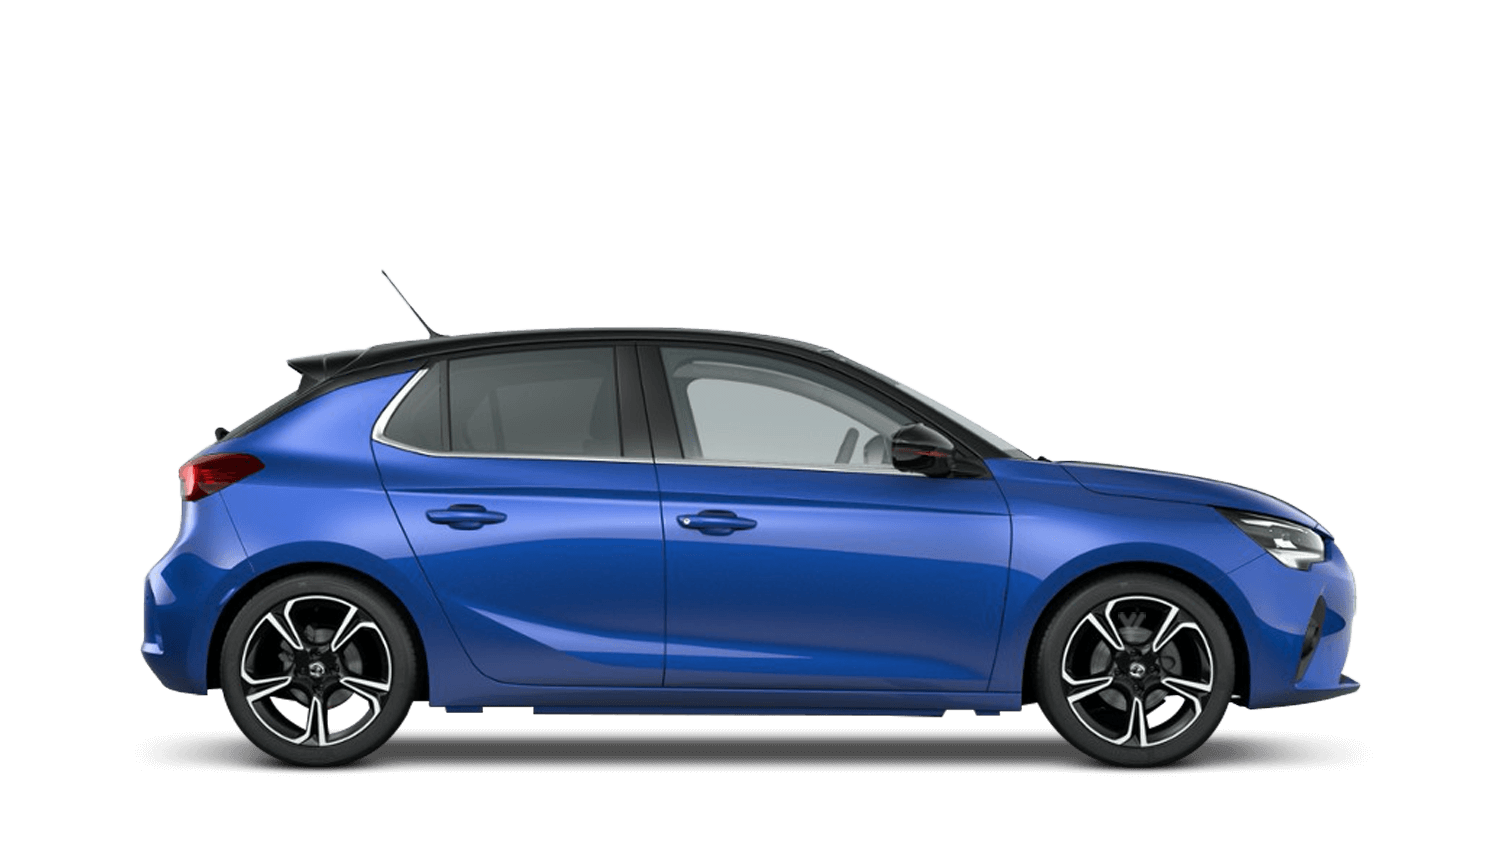 Voltaic Blue (Metallic) Vauxhall Corsa